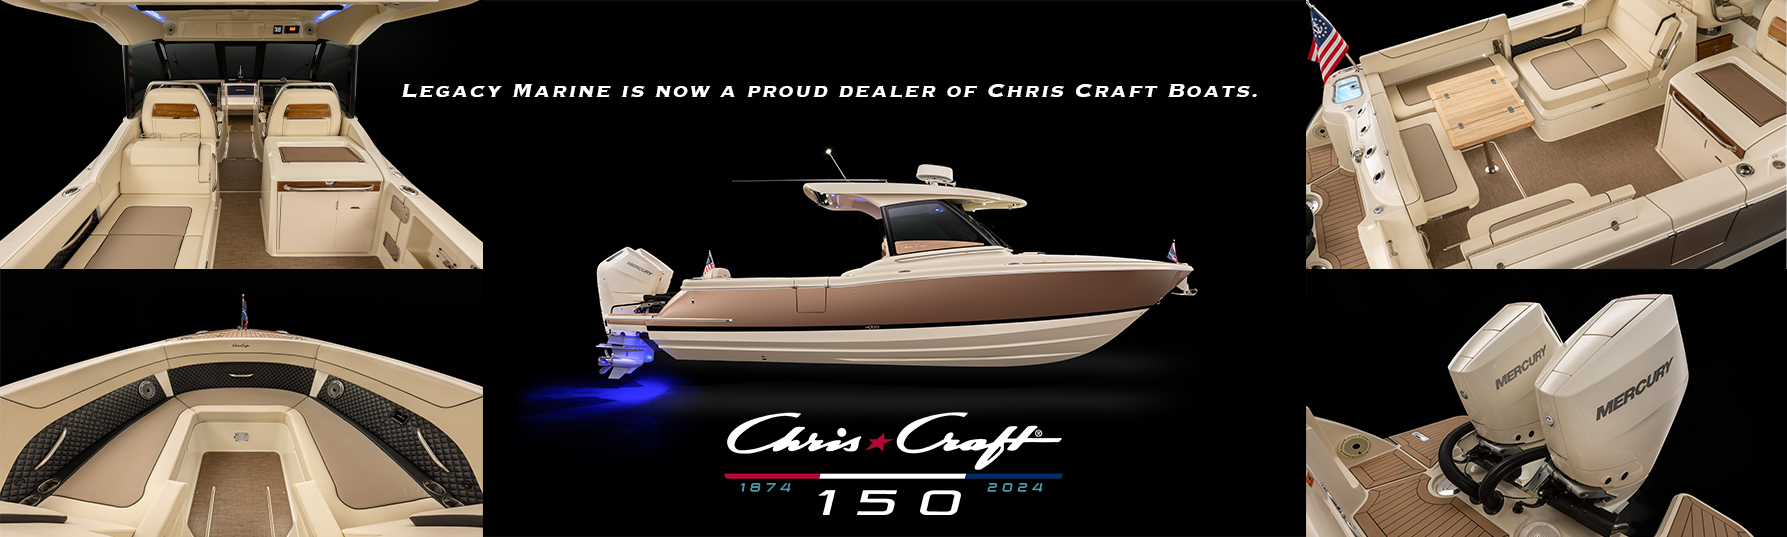 Chris Craft Banner 1